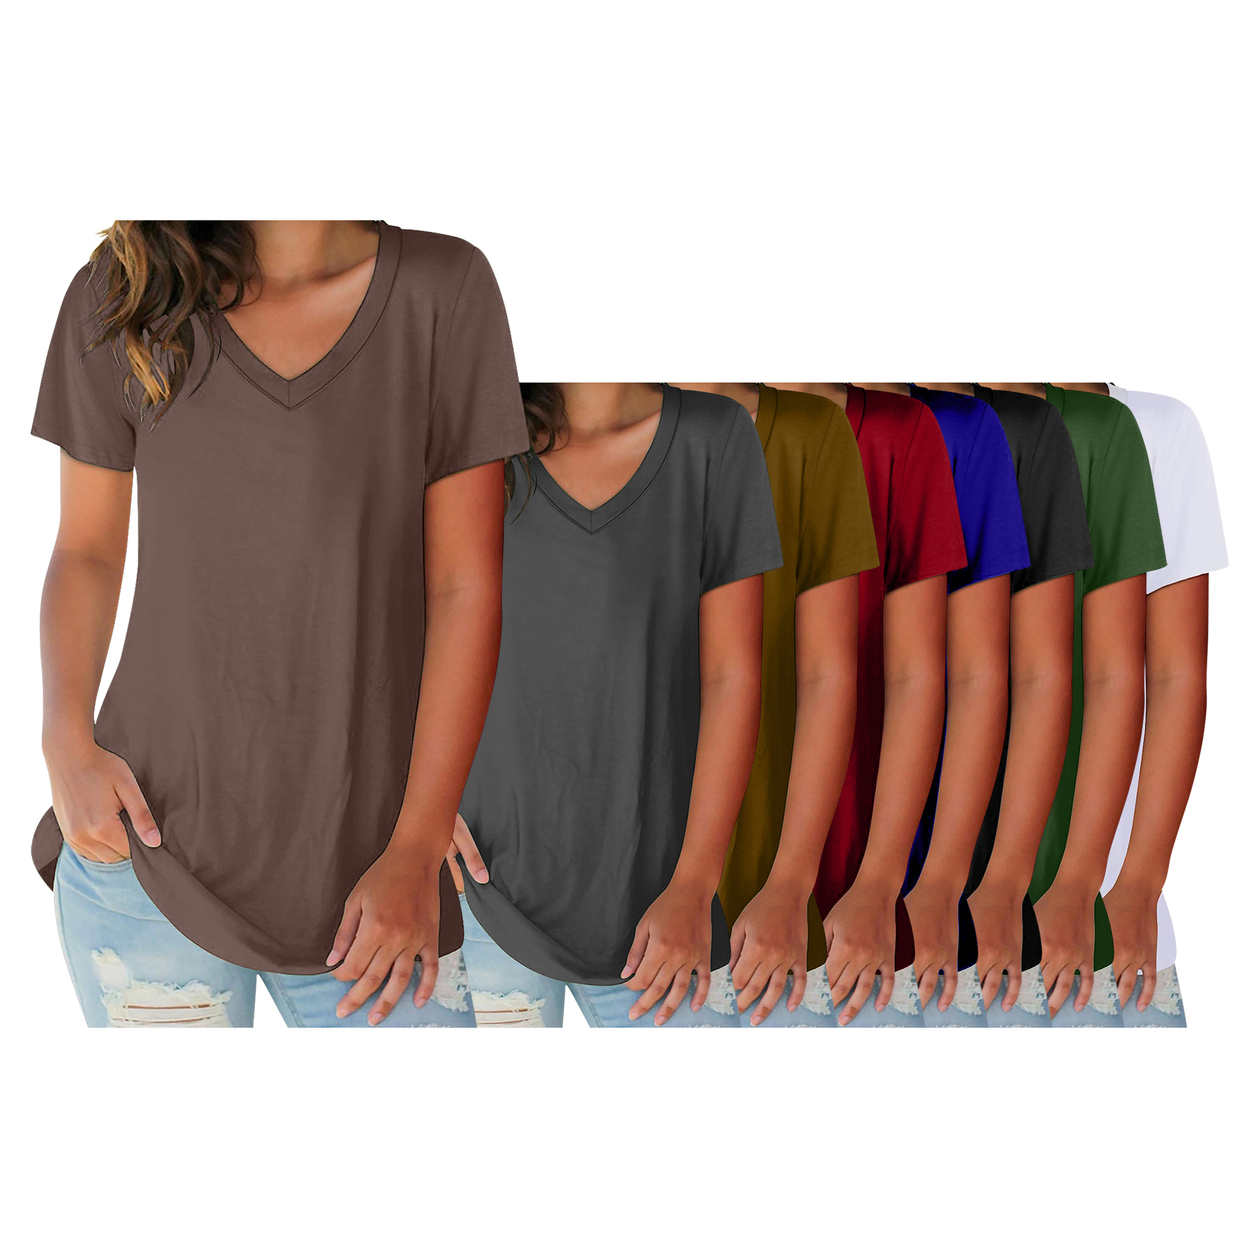 3-Pack: Women's Ultra Soft Smooth Cotton Blend Basic V-Neck Short Sleeve Shirts - Black, Navy Mustard, X-large